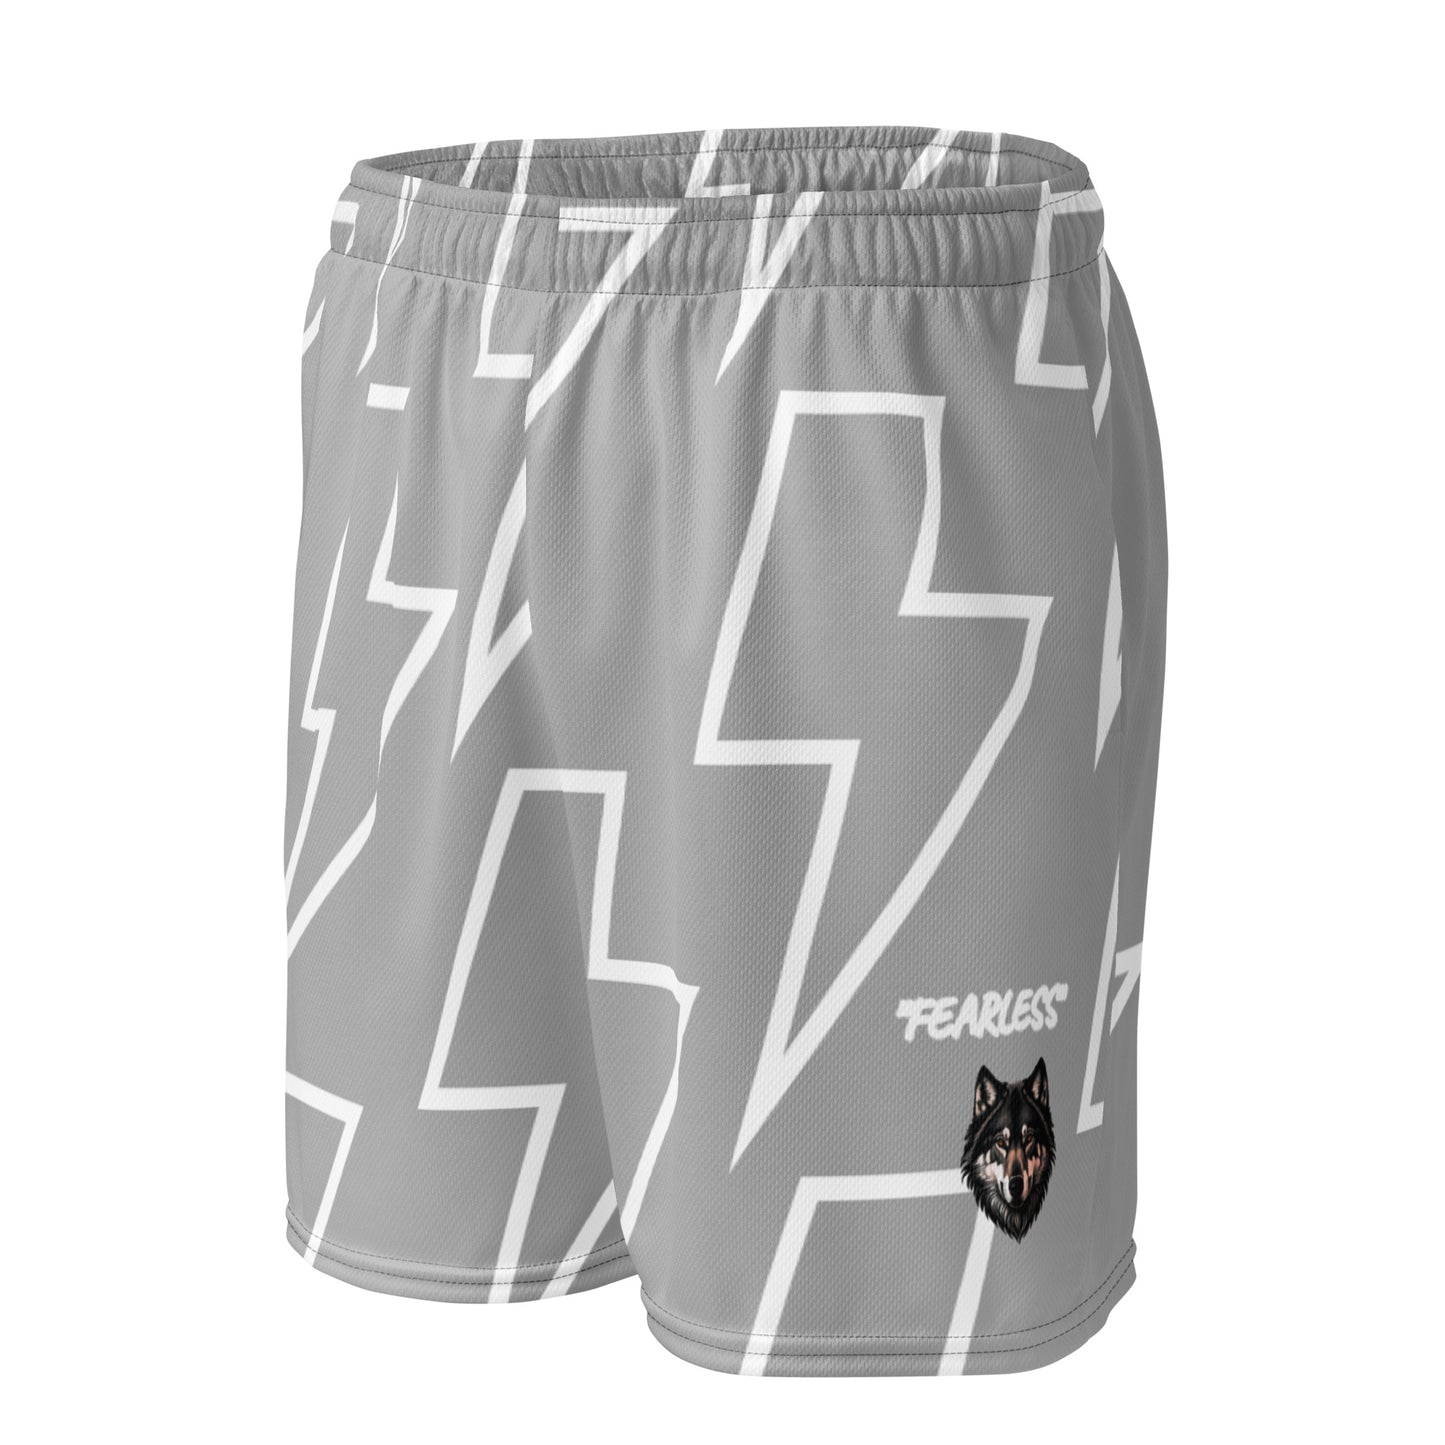 Fearless mesh shorts 4